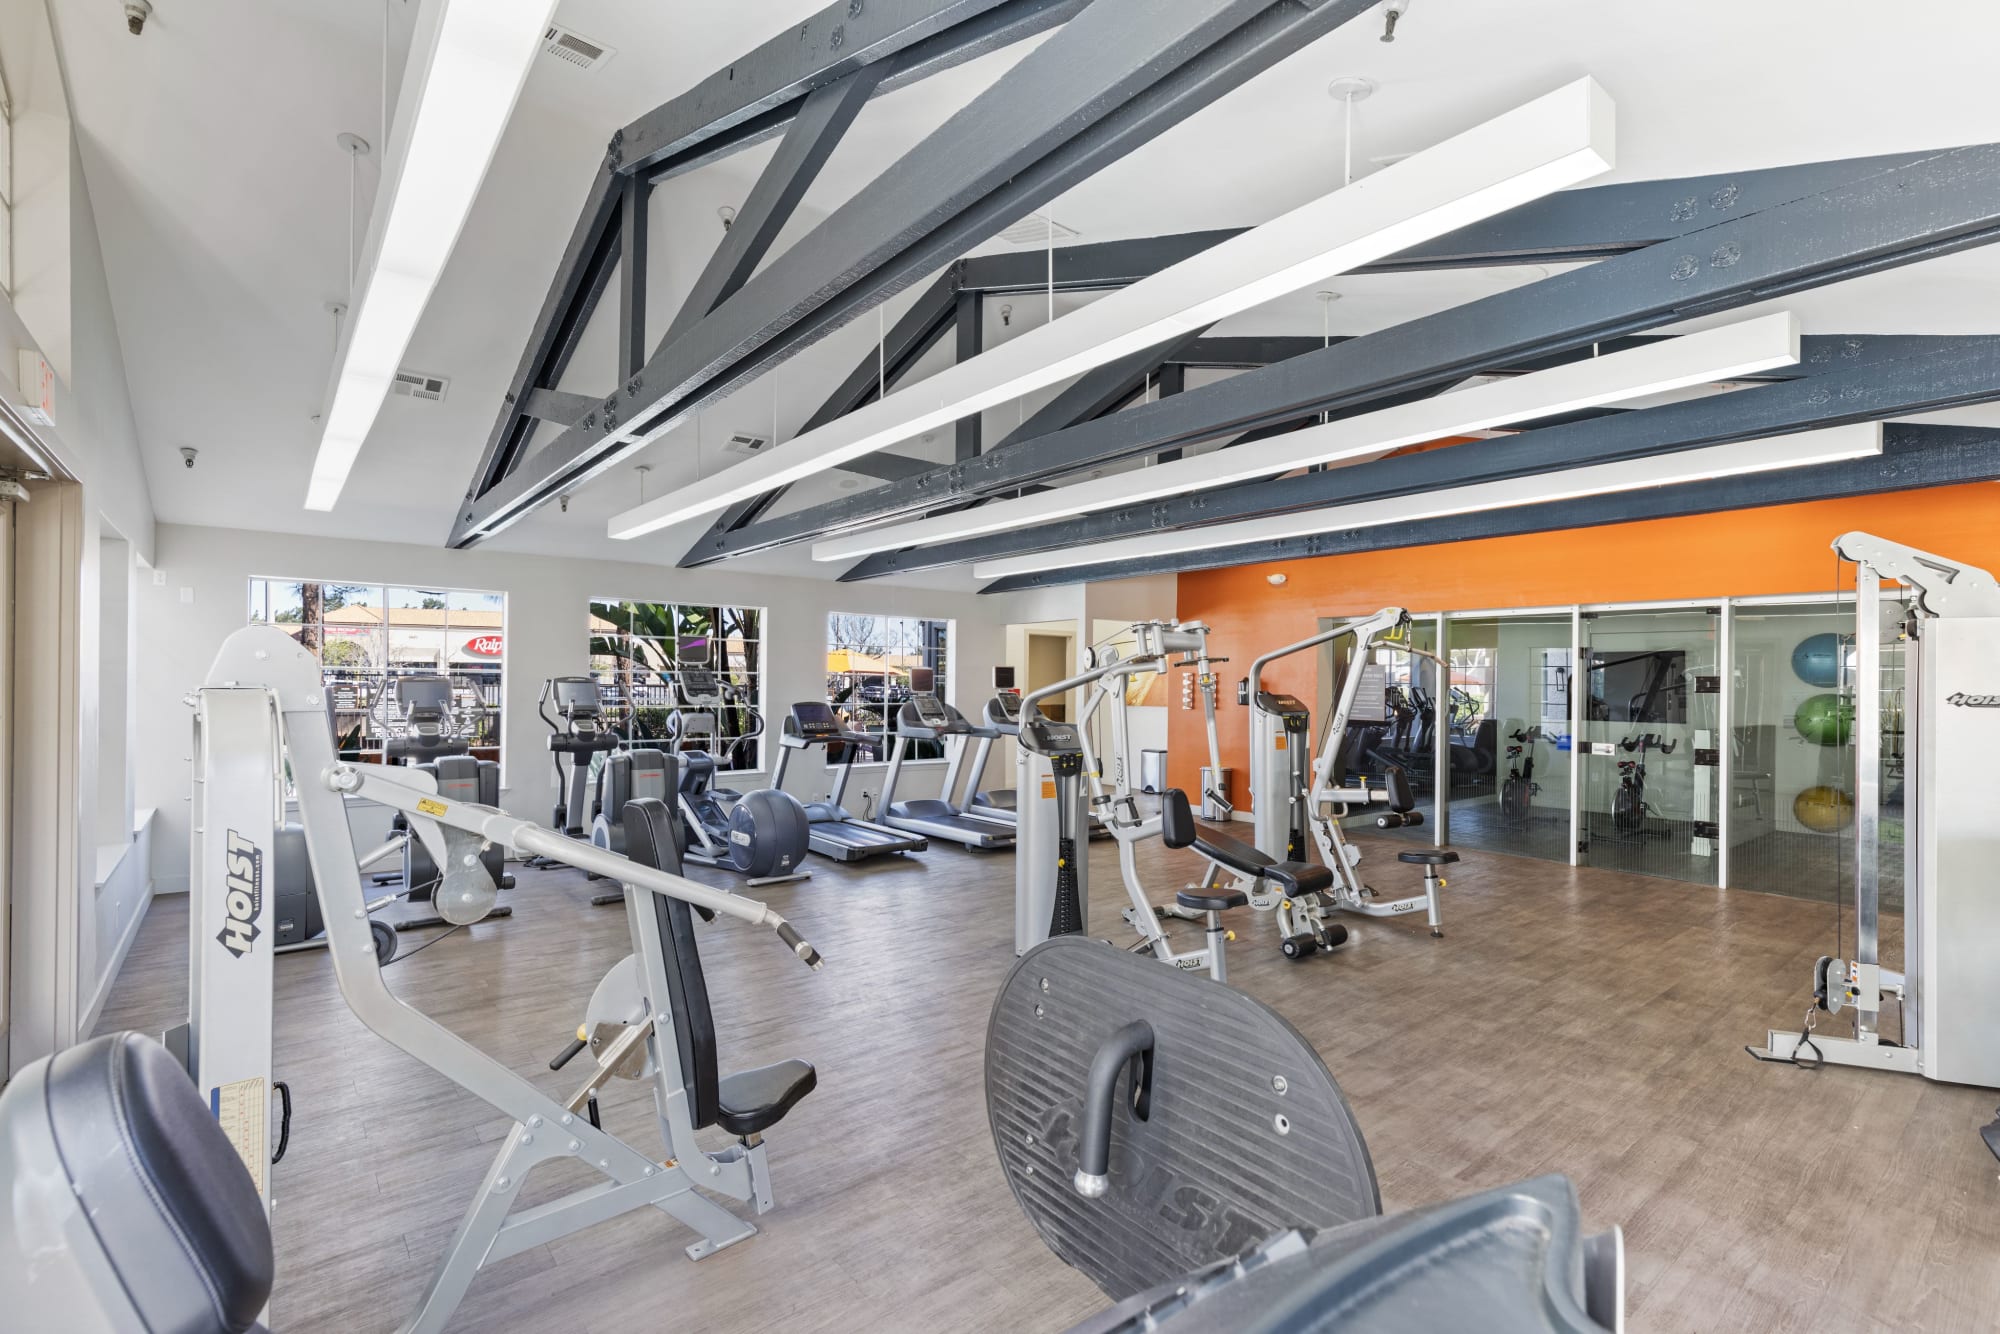 Fitness center at Sierra Del Oro Apartments in Corona, California